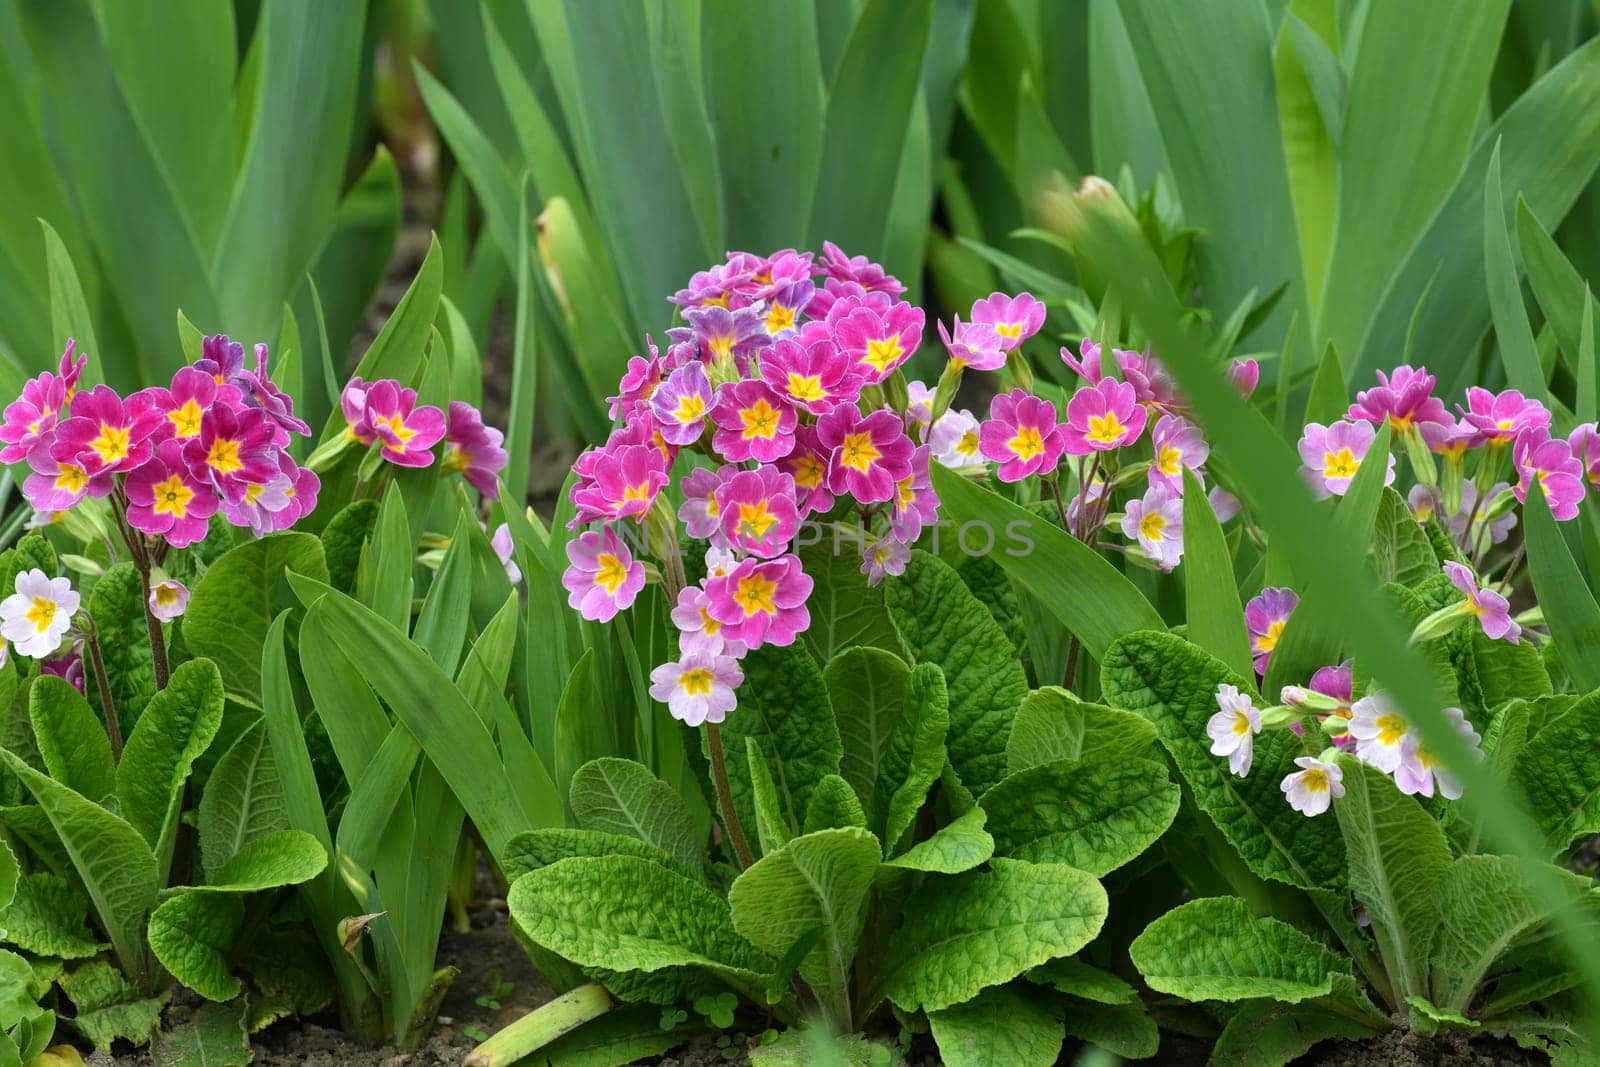 Primula vulgaris - early spring flower, primrose